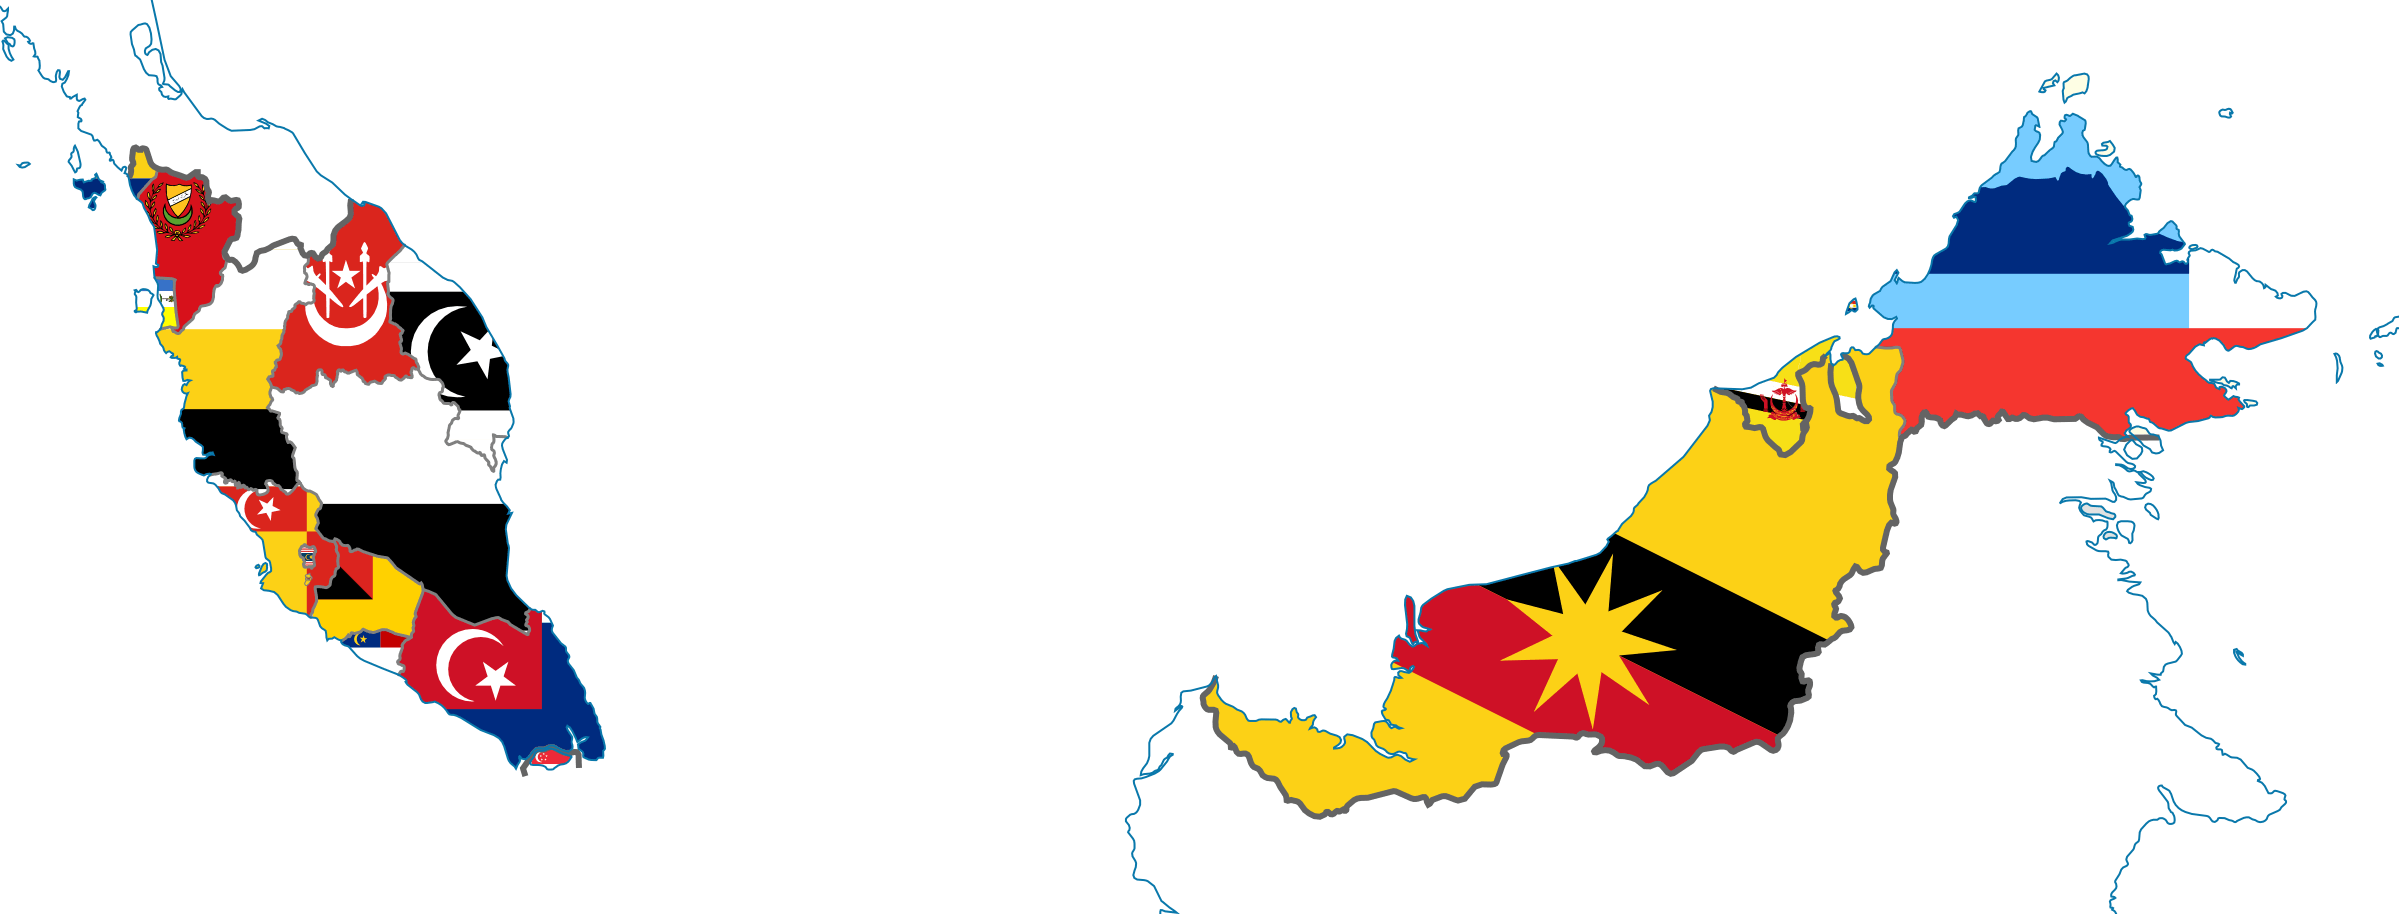 Malaysia Map 2014